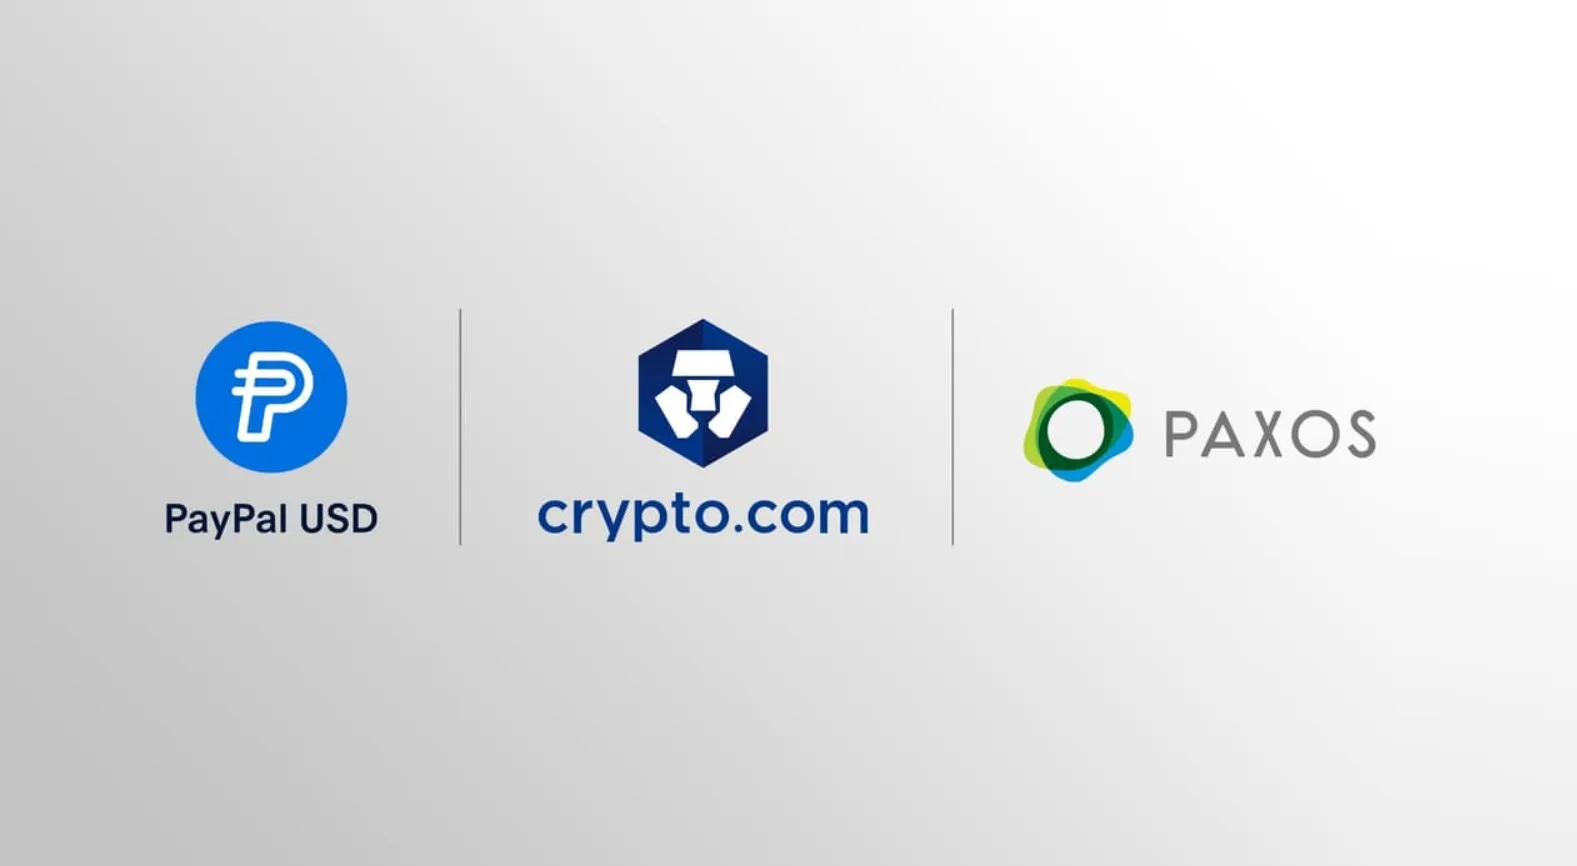 Paypal crypto com paxos